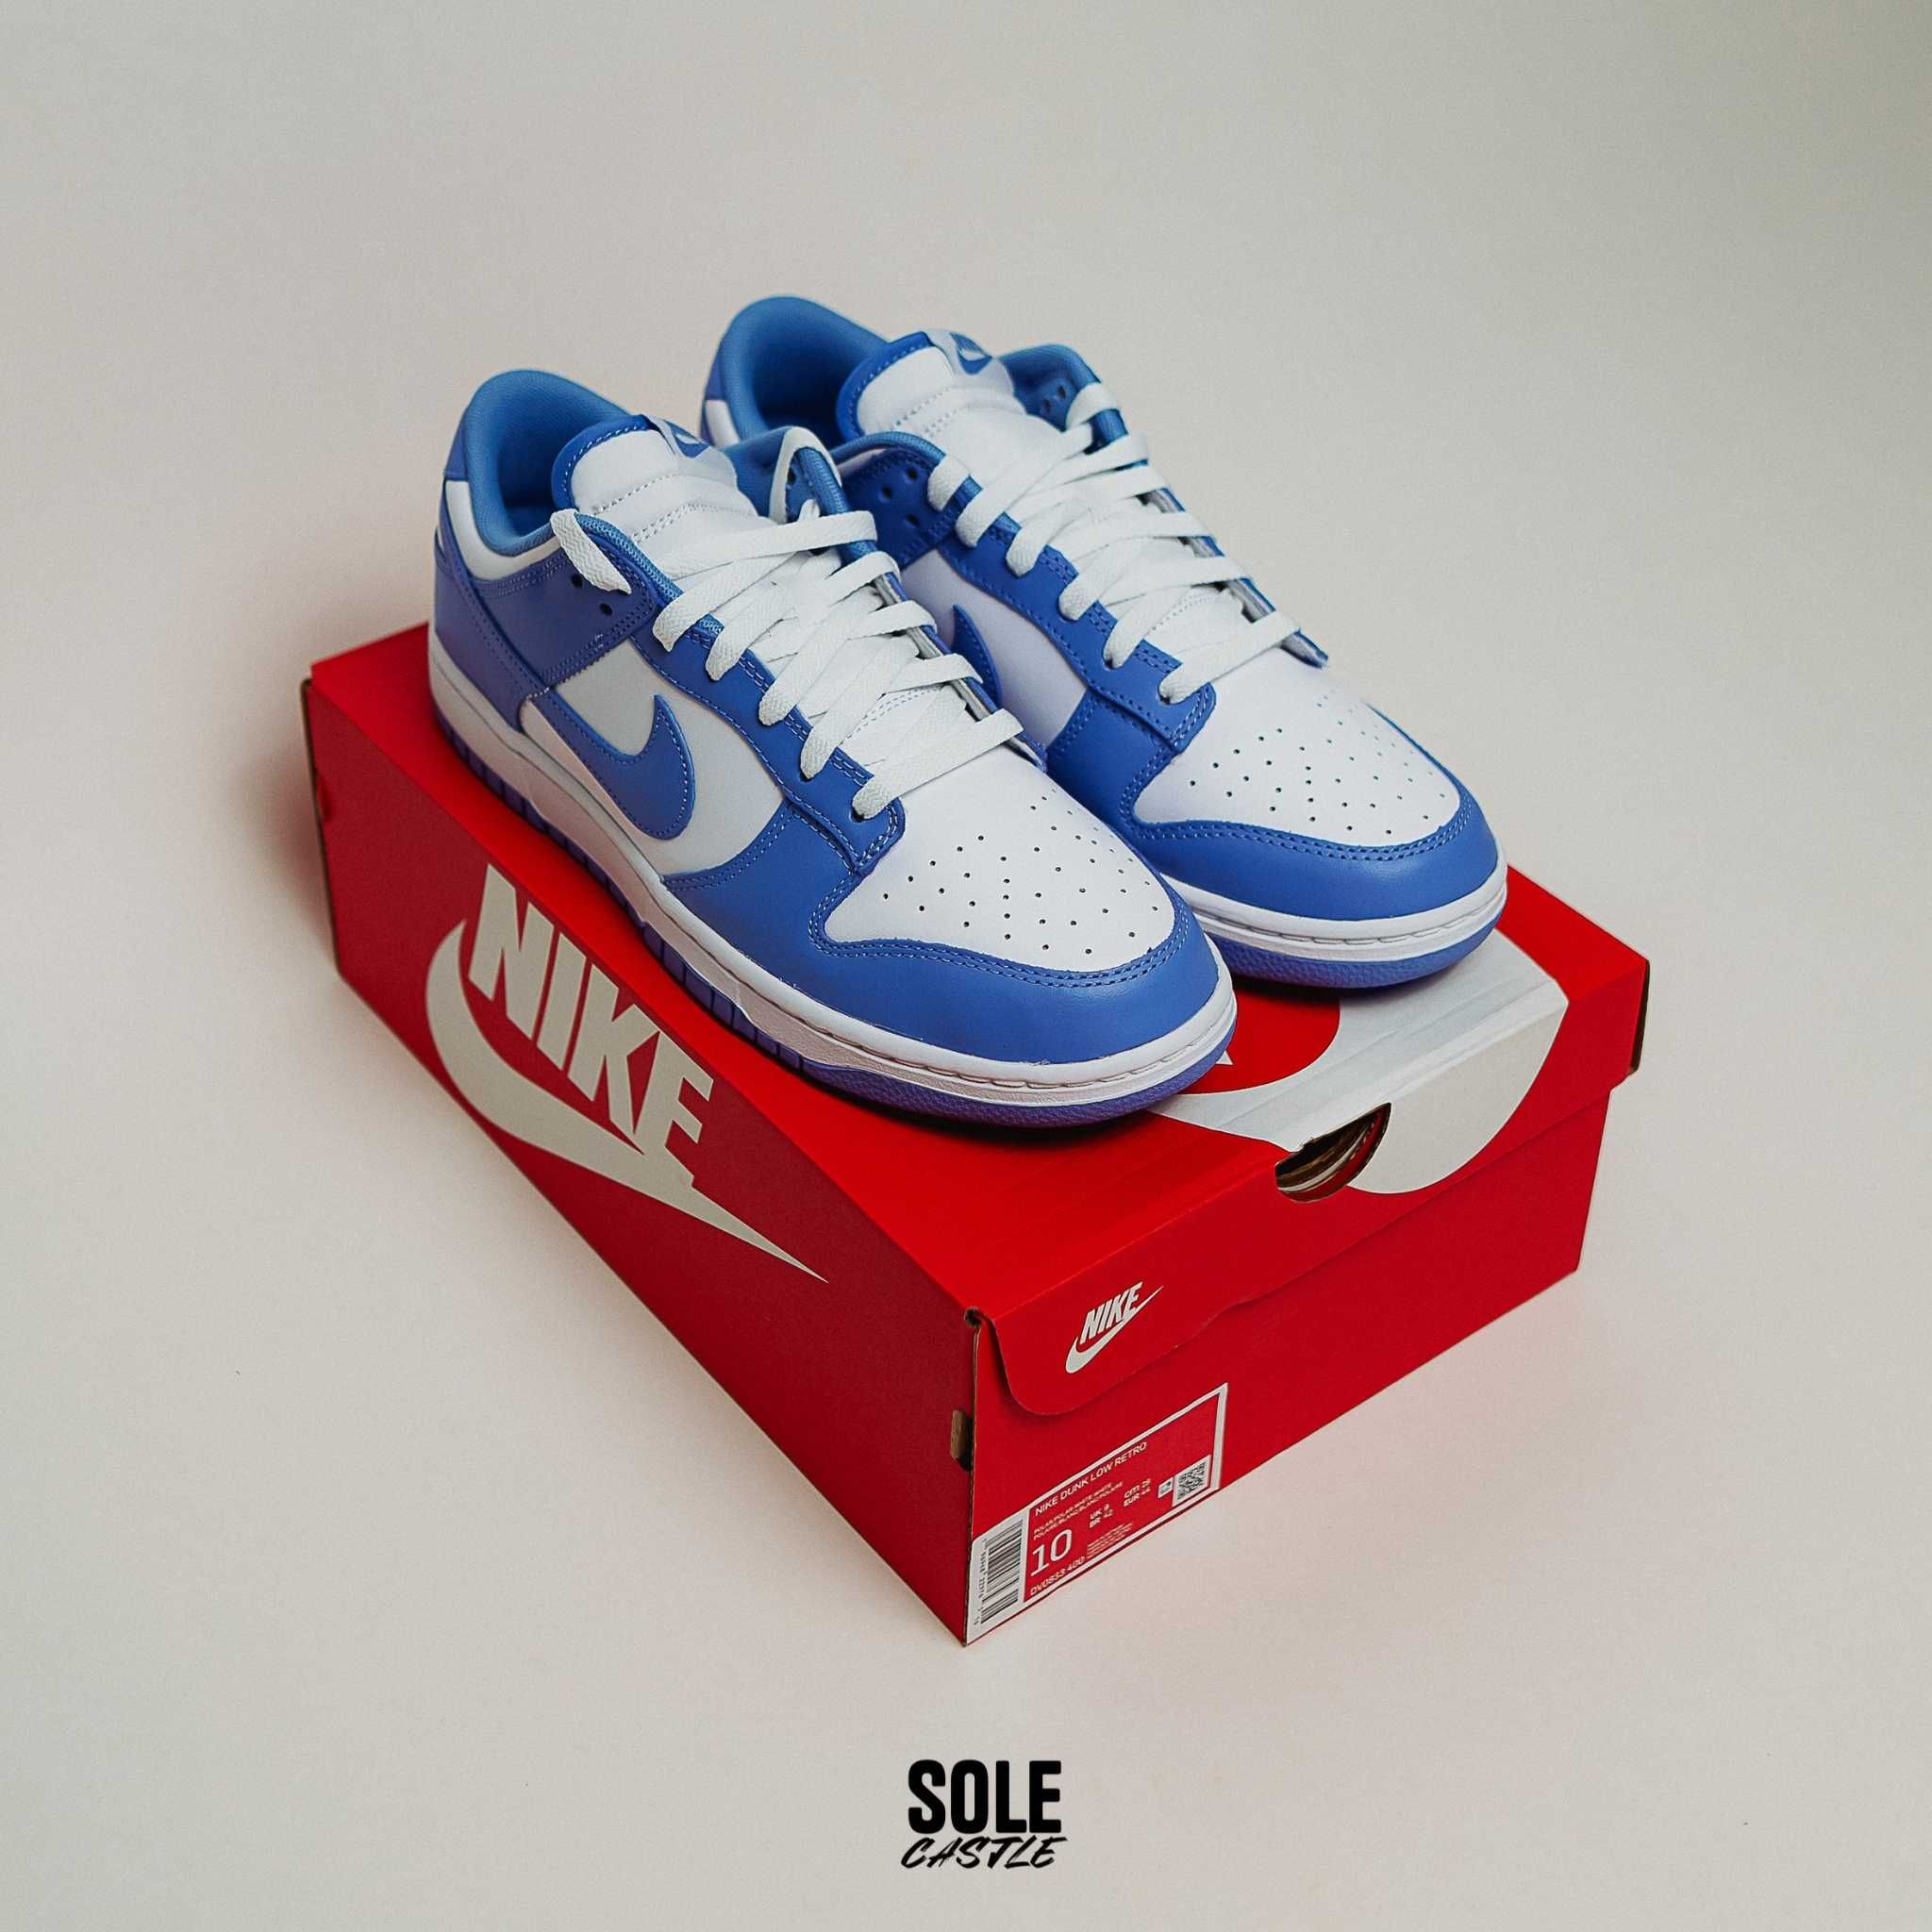 Nike Dunk Low "Polar Blue" (nu jordan,puma yeezy)